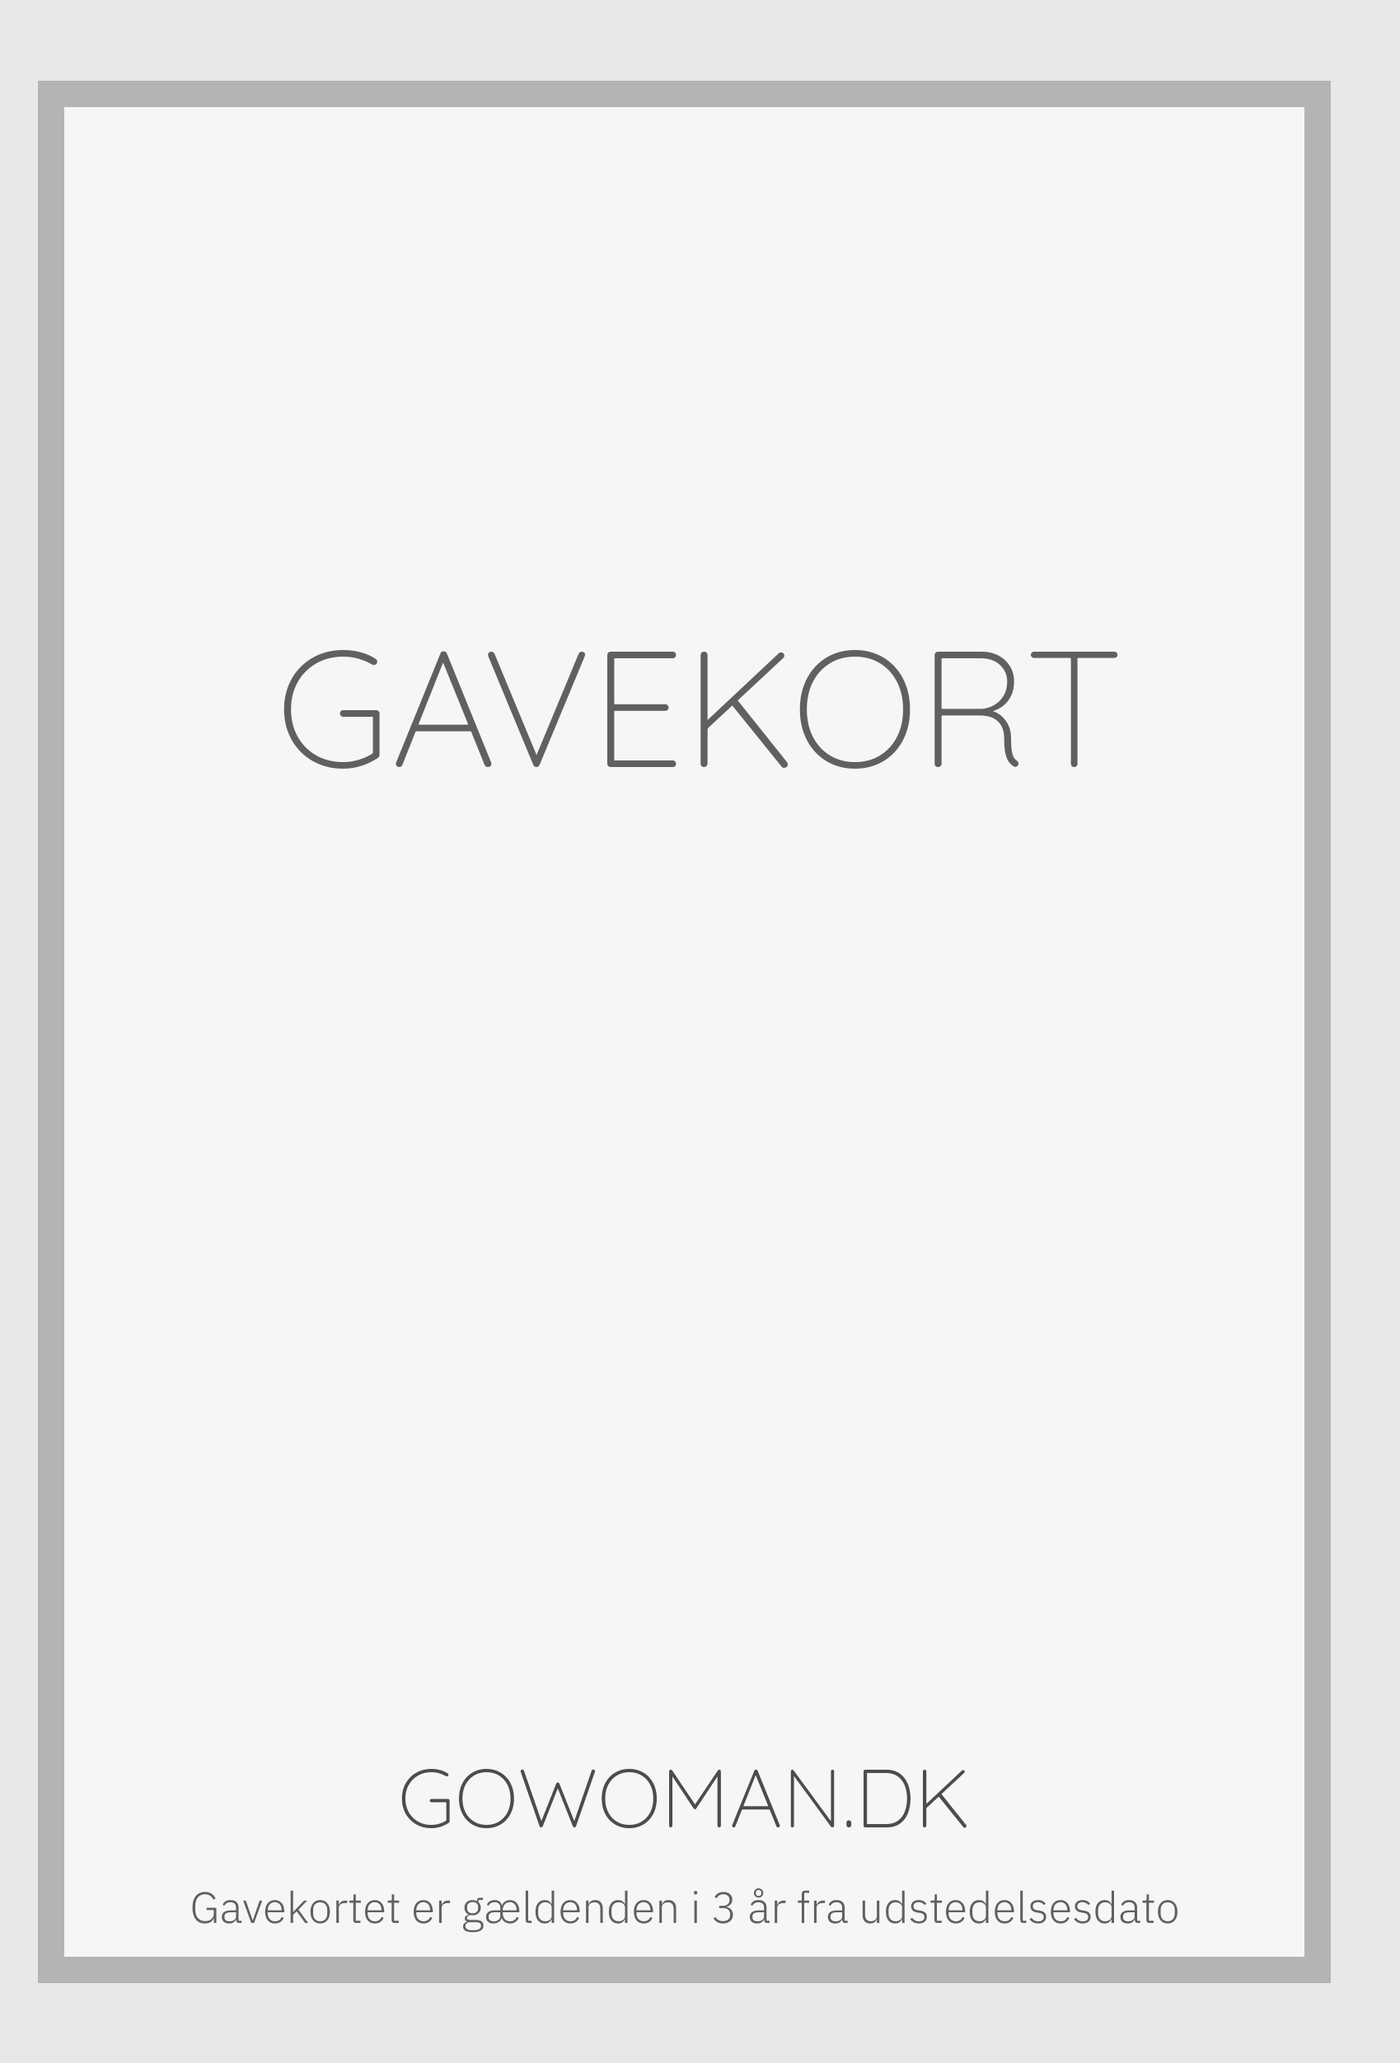 Gavekort - E-mail